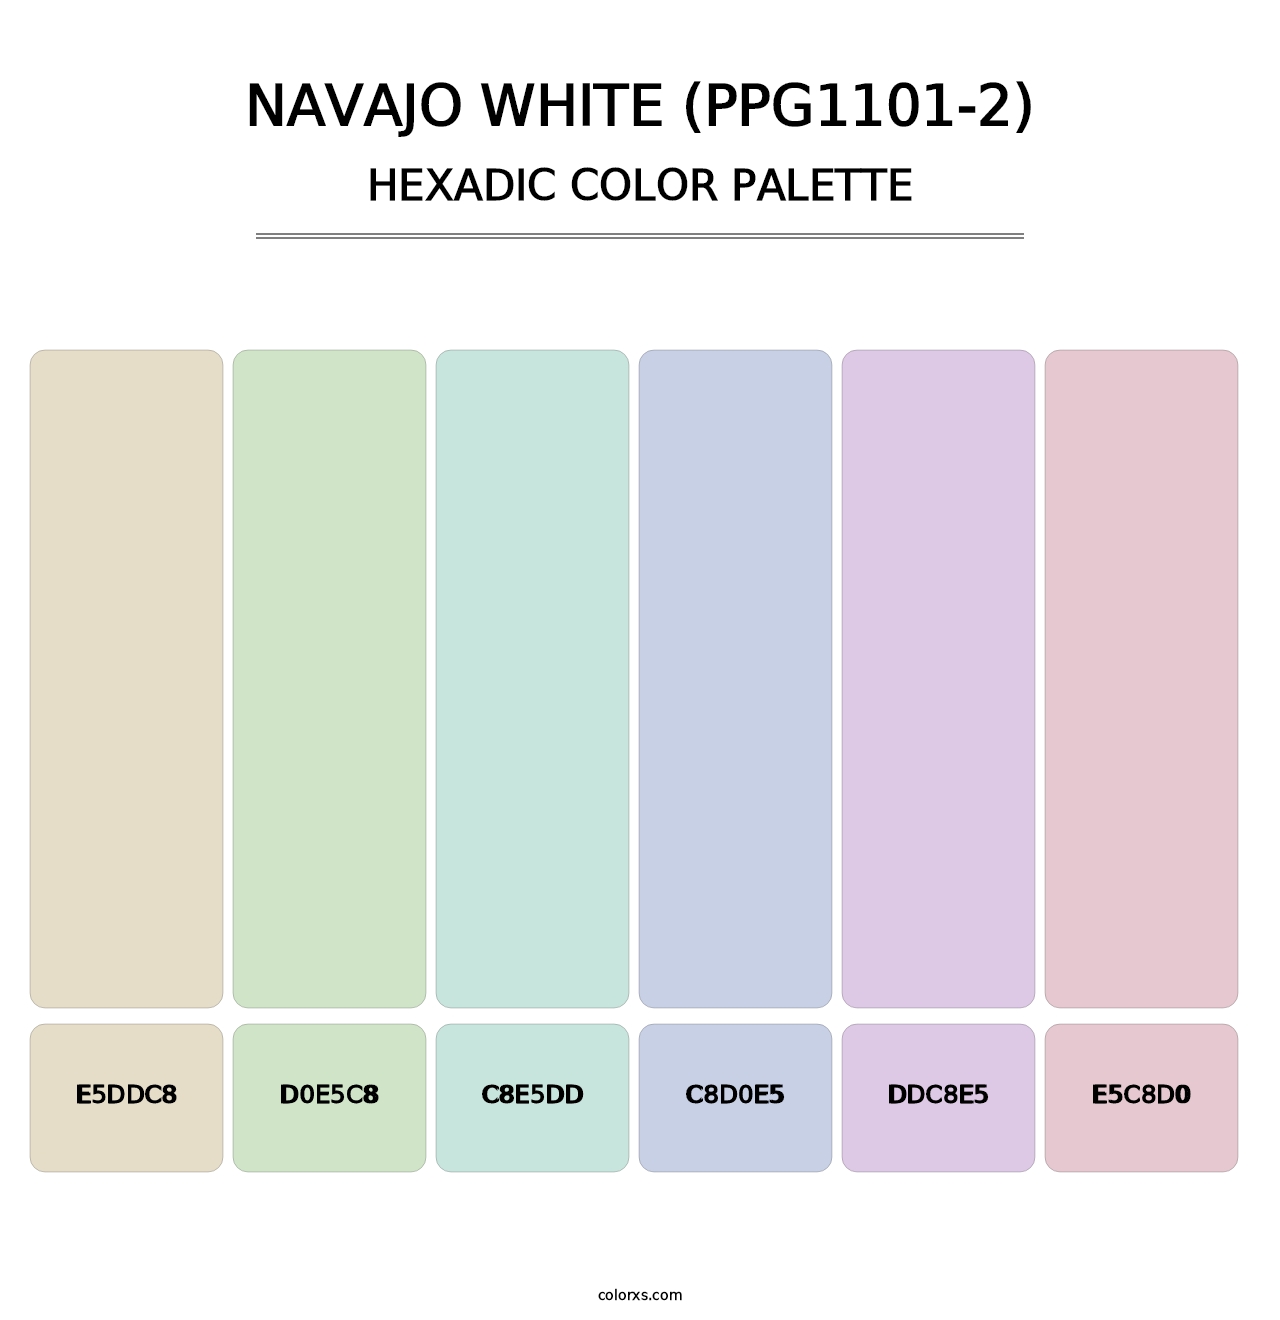 Navajo White (PPG1101-2) - Hexadic Color Palette